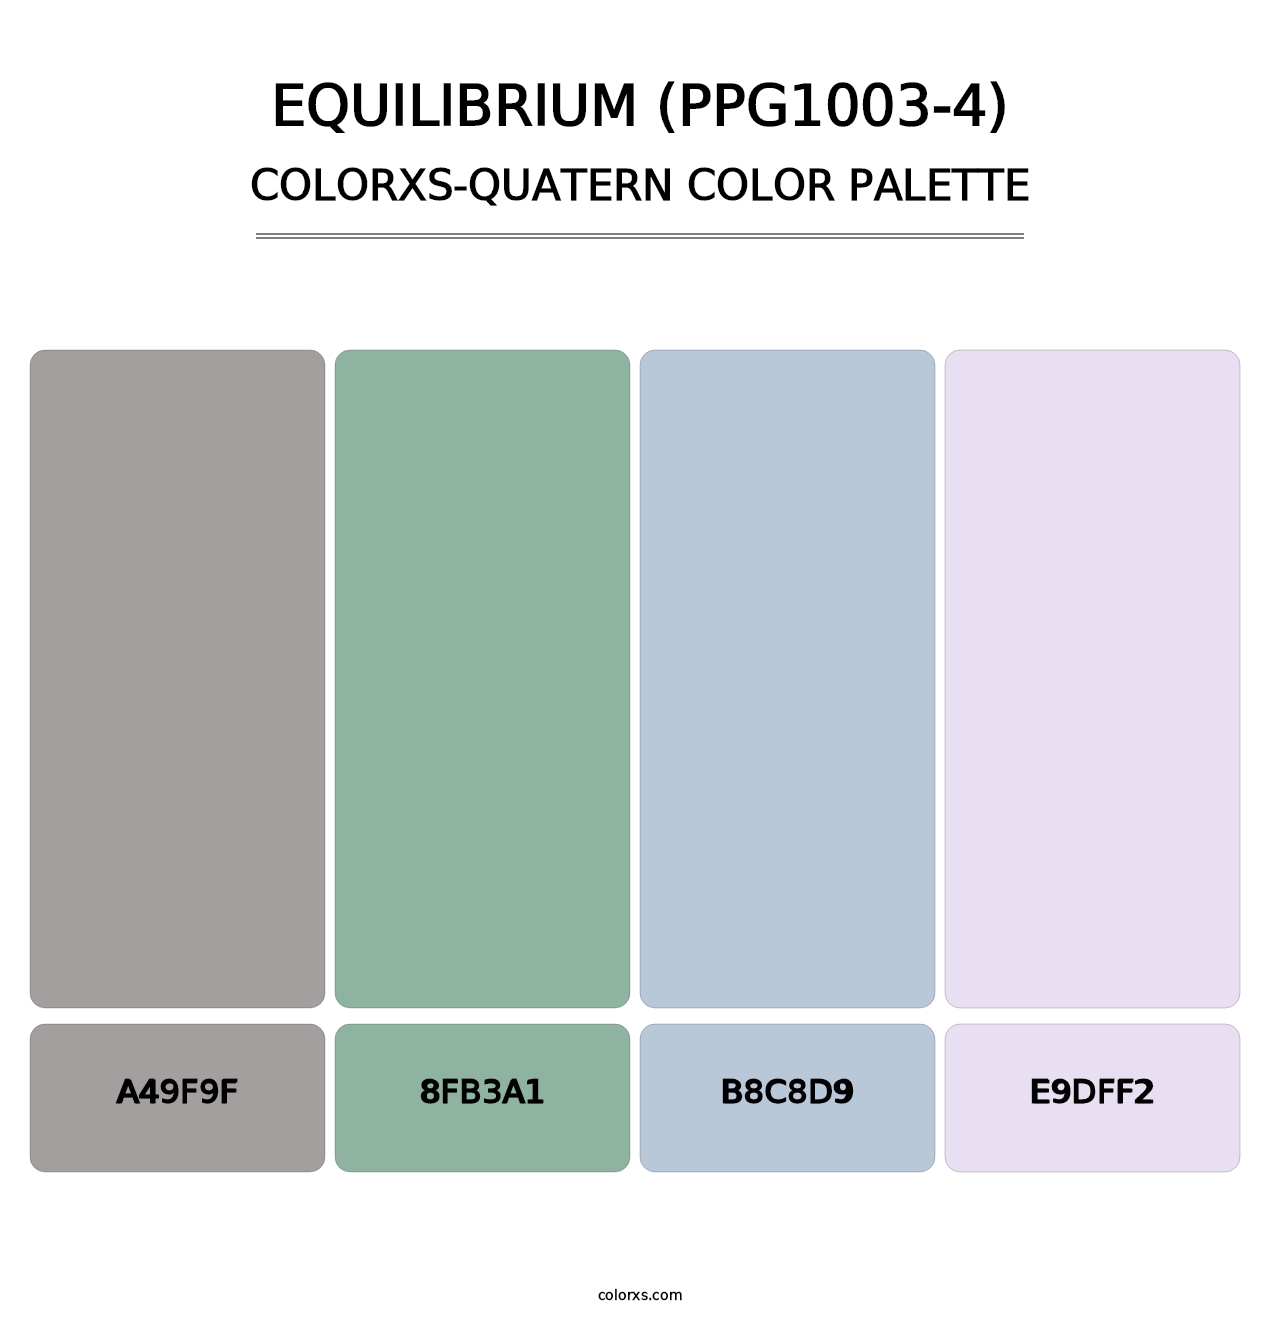 Equilibrium (PPG1003-4) - Colorxs Quatern Palette